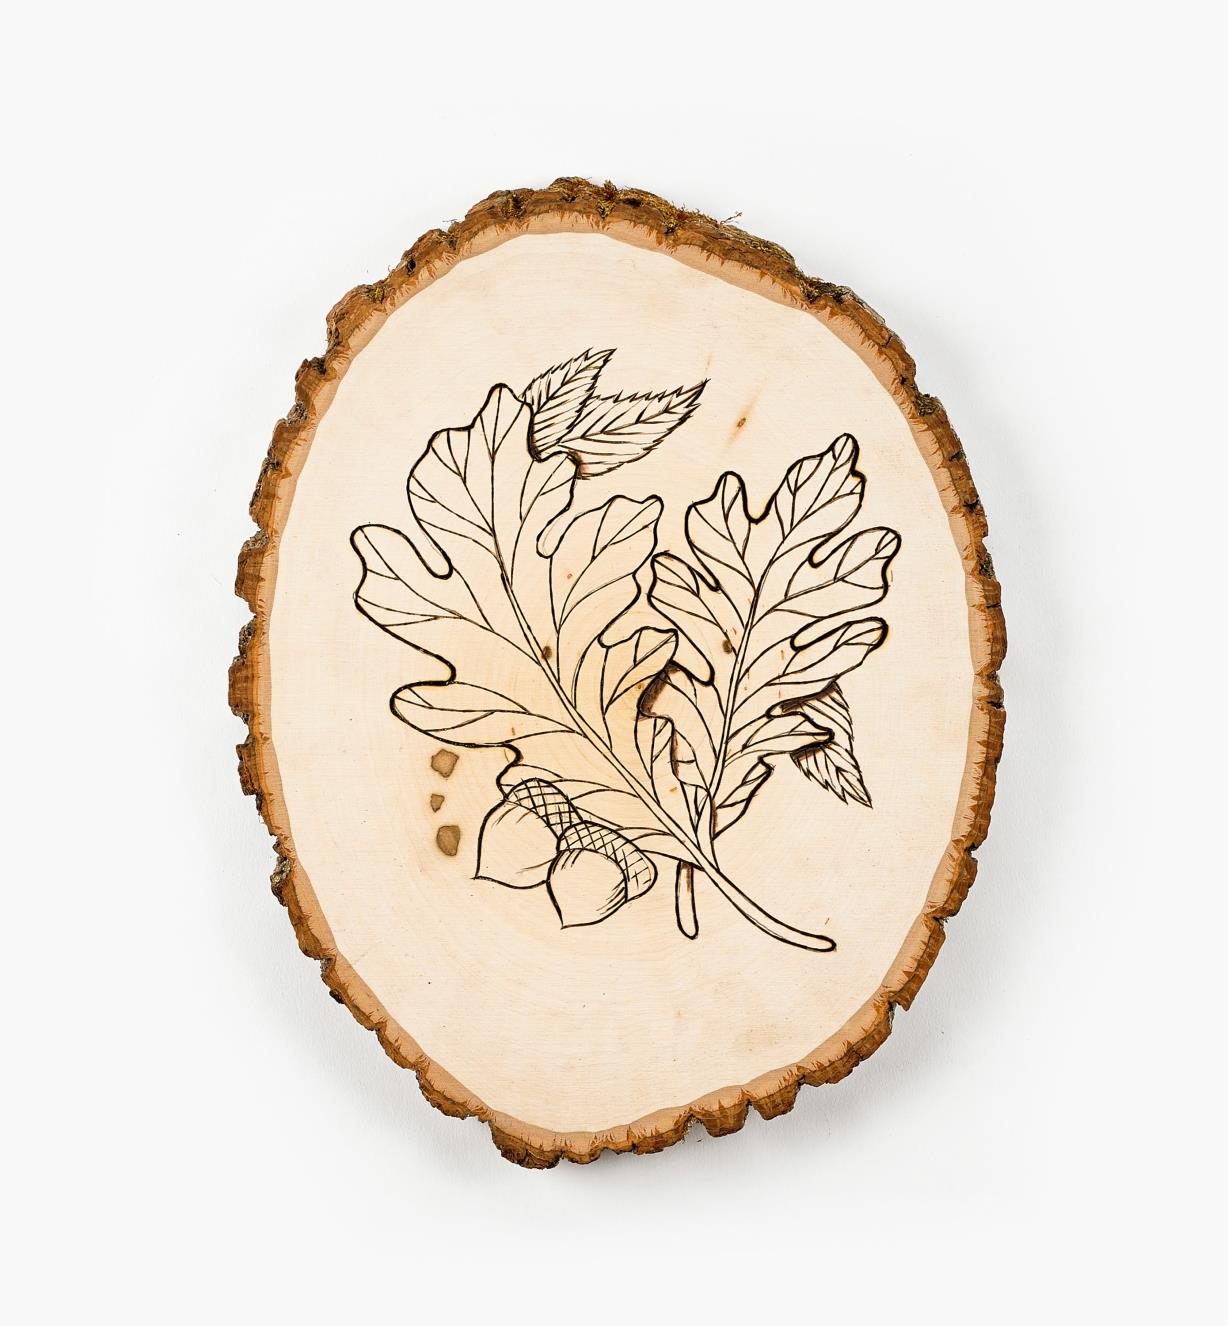 Sample design of oak leaves and acorns burned into basswood plaque